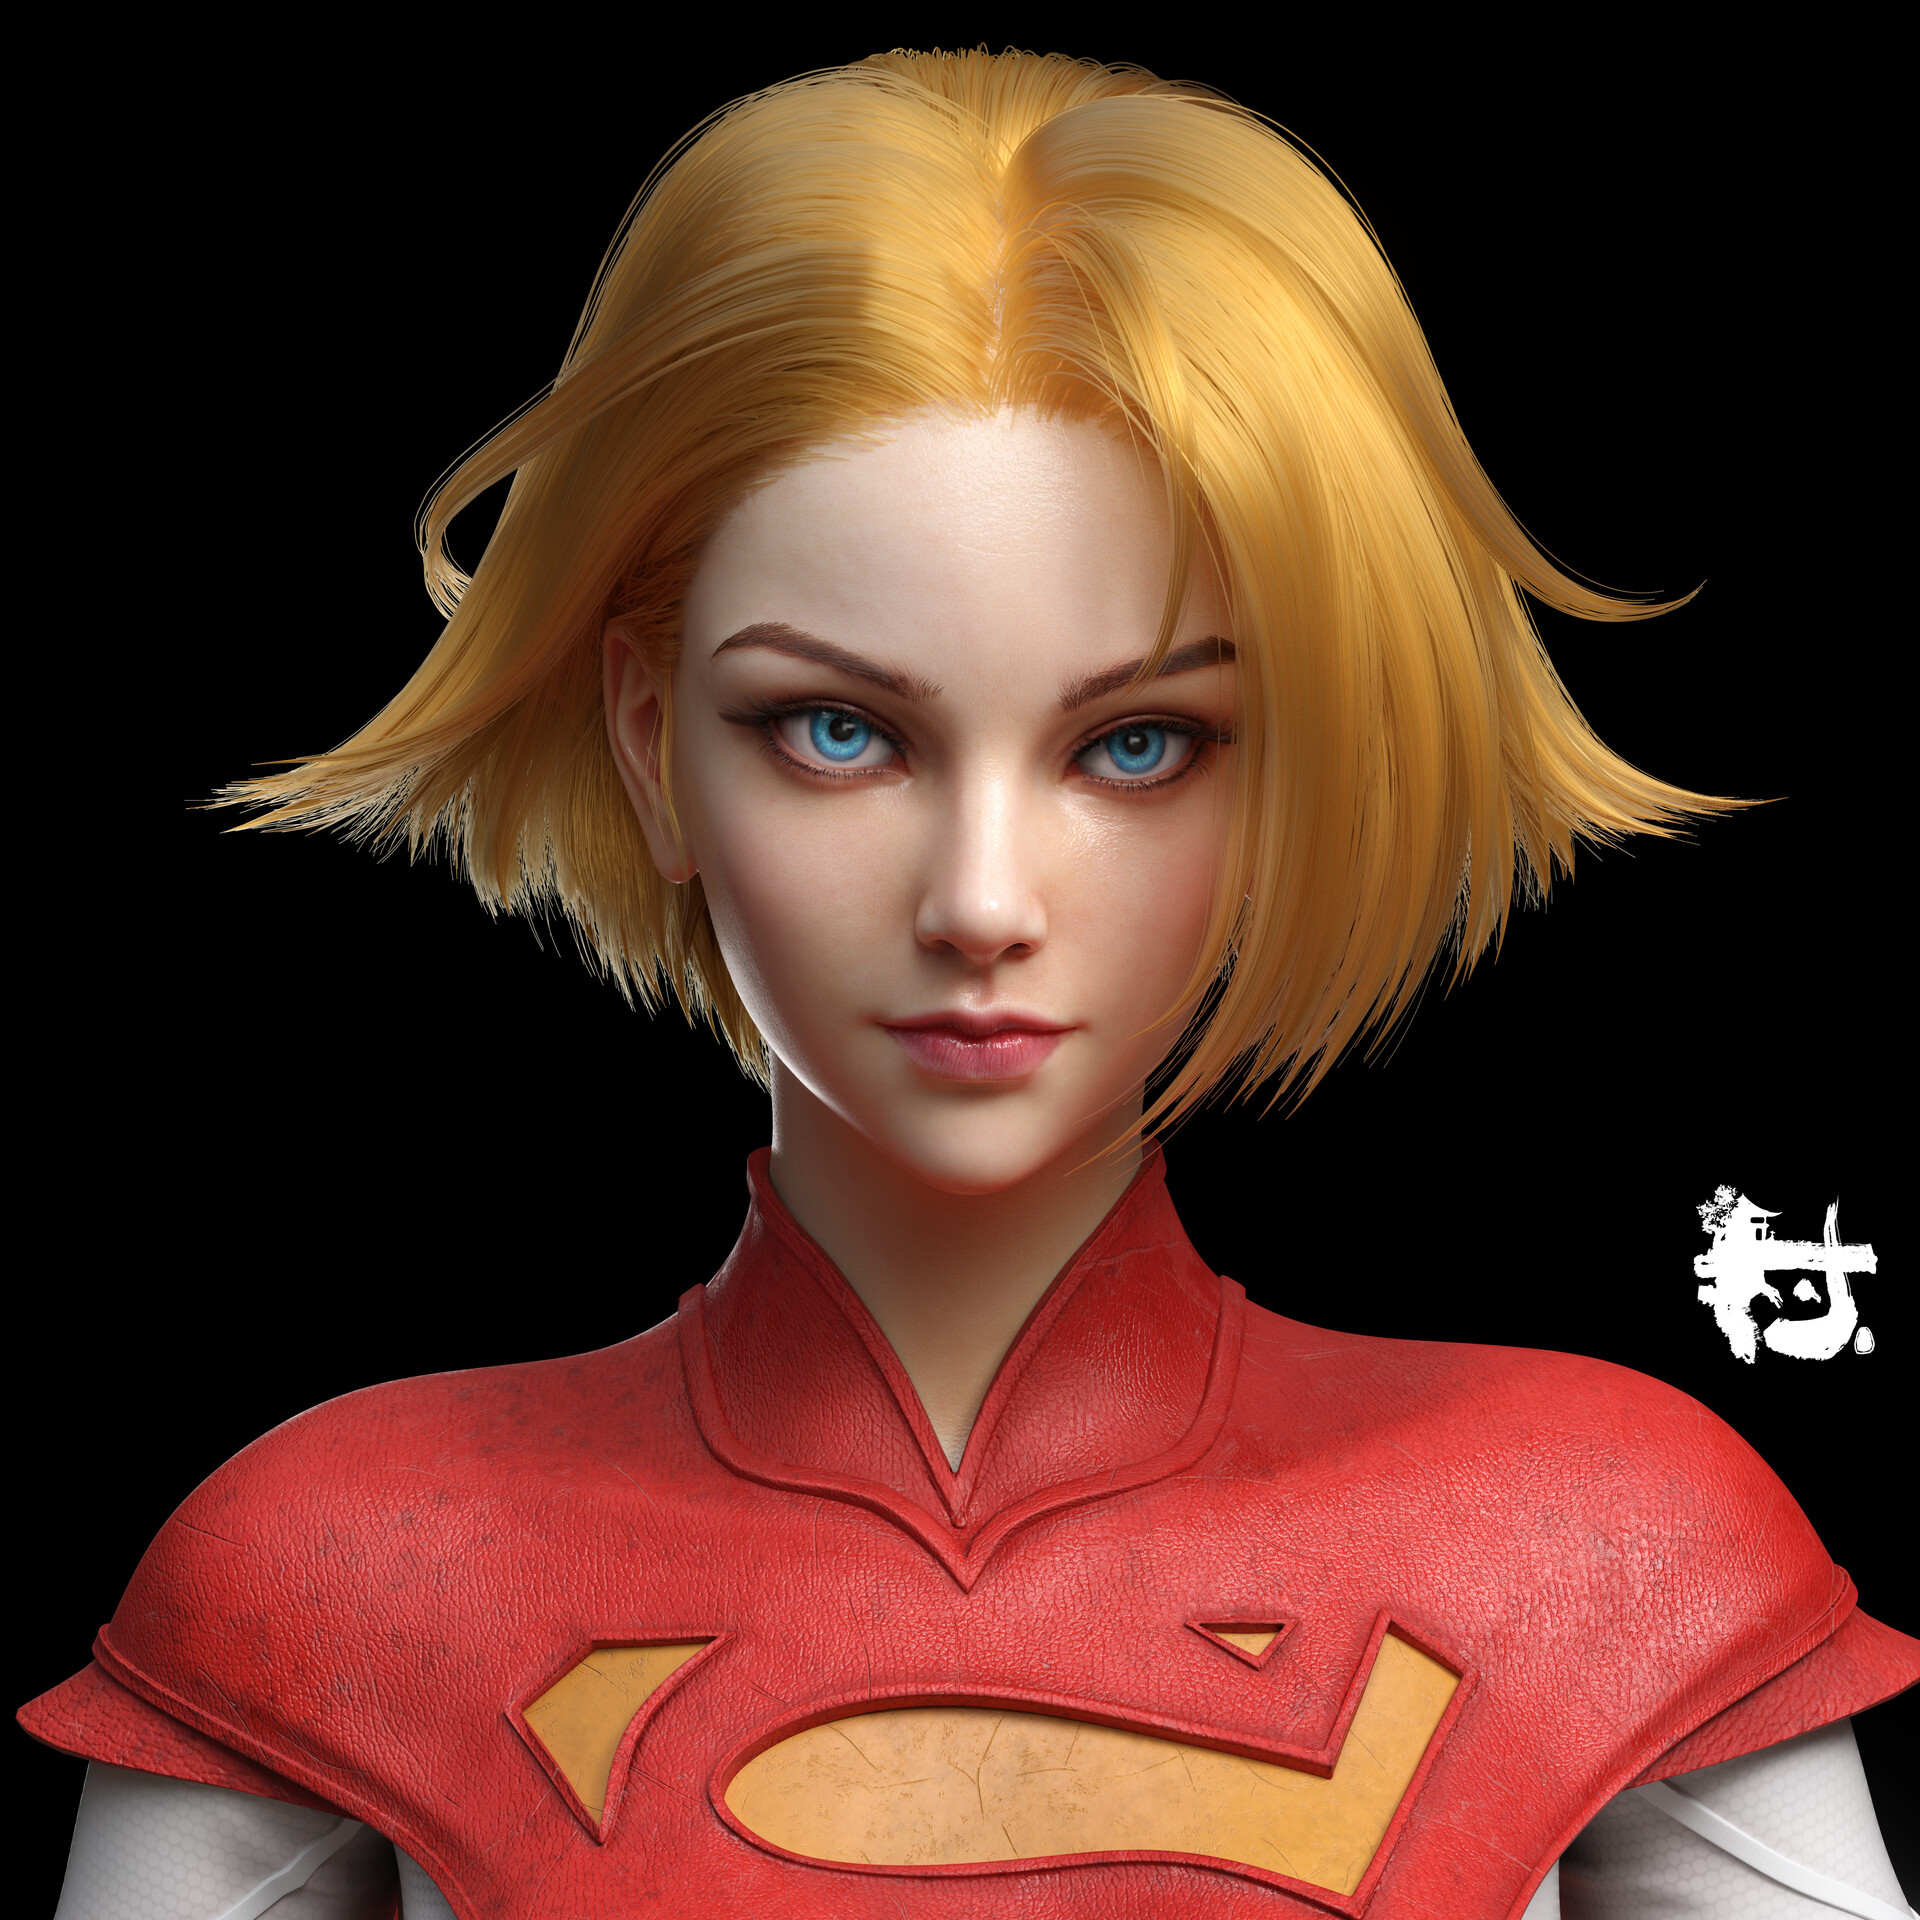 General 1920x1920 Chen Cunkou women Supergirl blonde blue eyes short hair portrait digital art simple background CGI